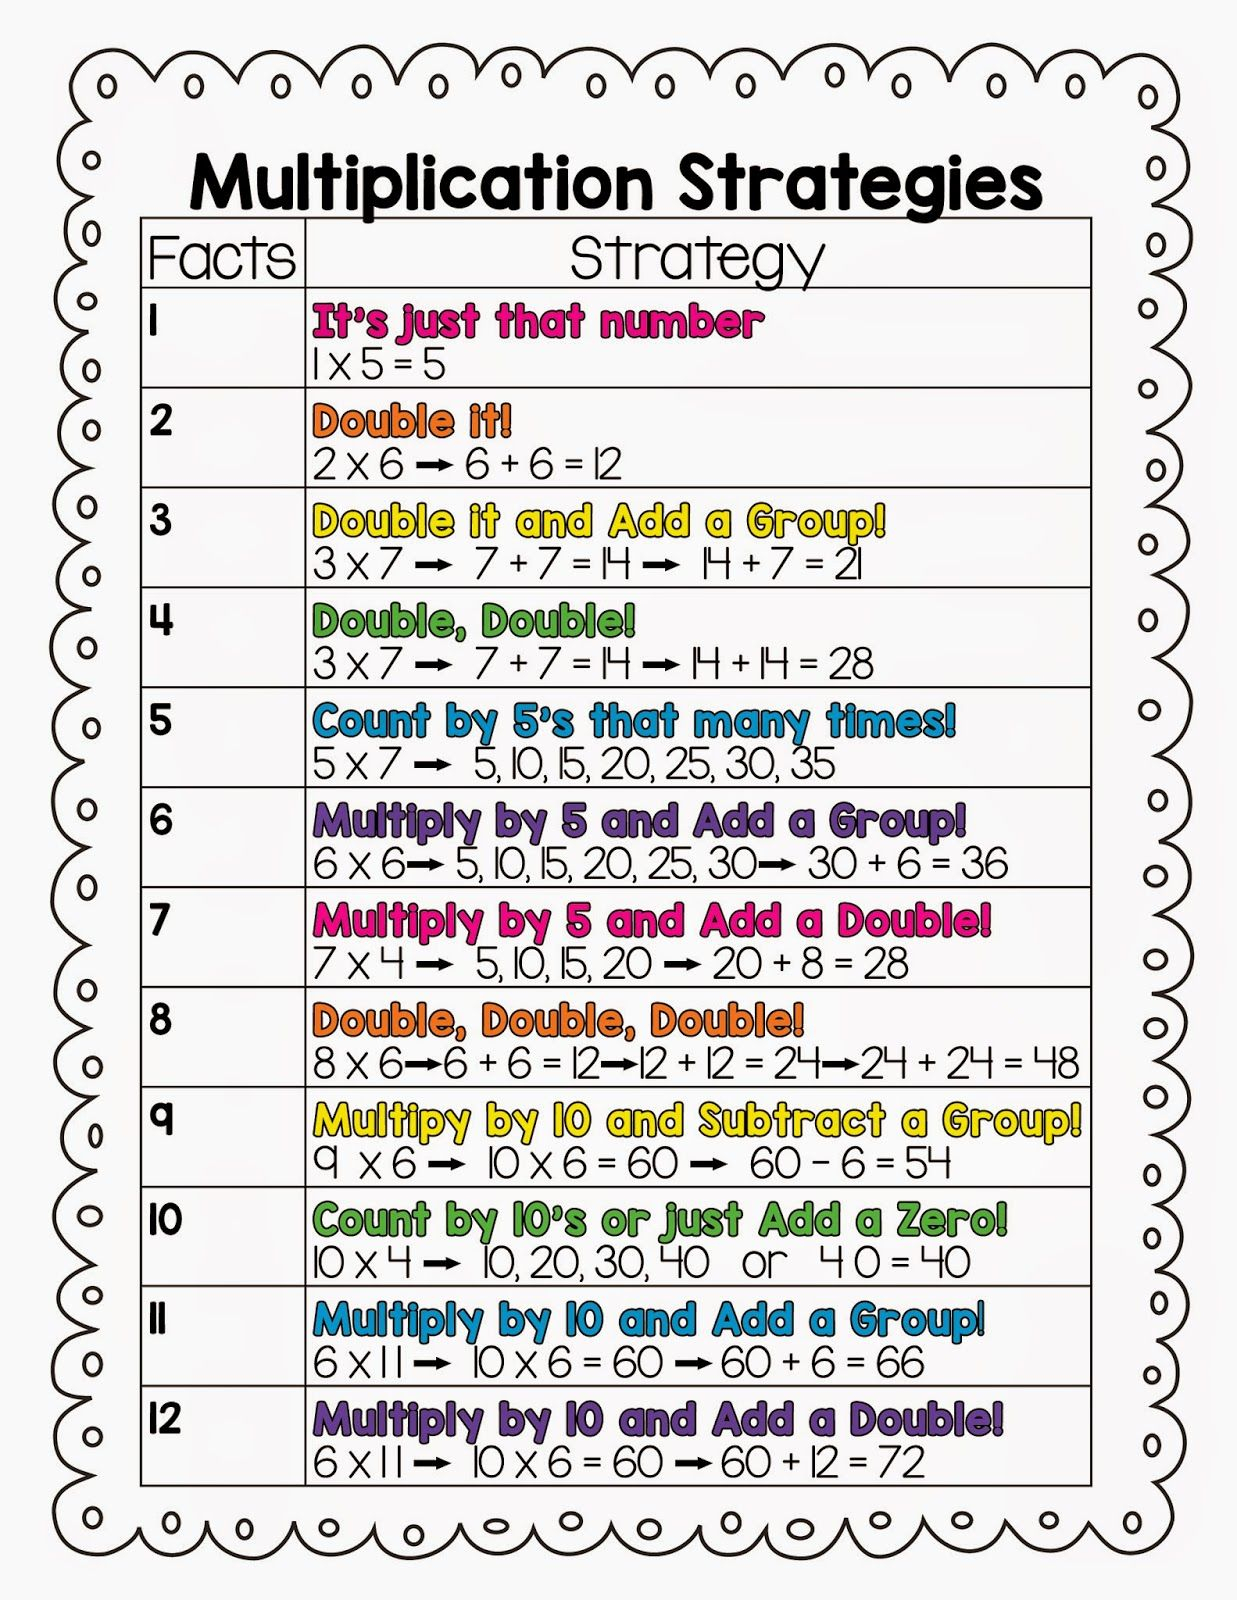 printable-multiplication-strategies-printablemultiplication